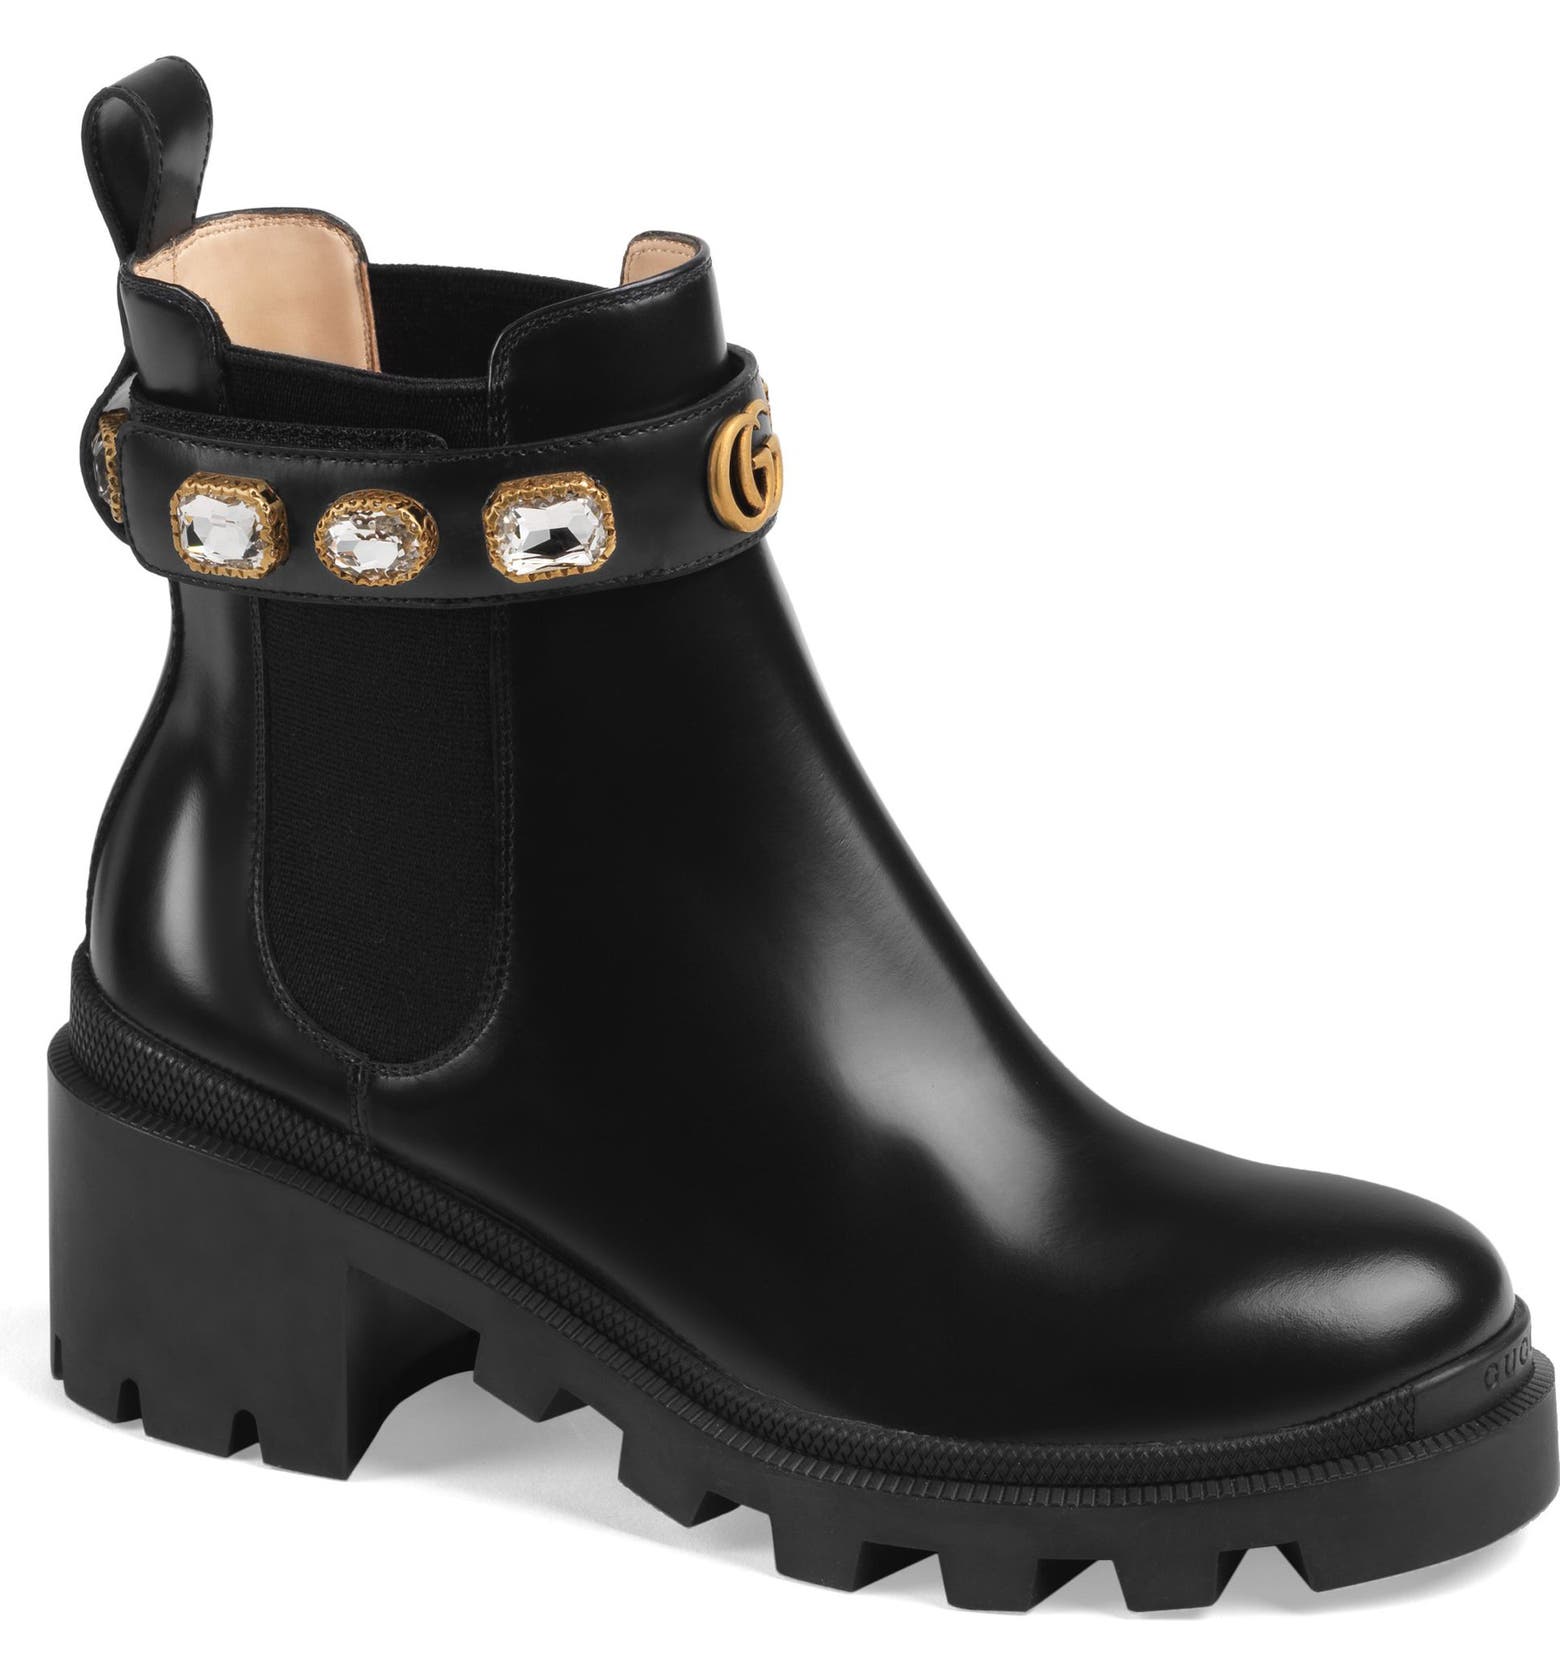 Black Gucci Chelsea boots